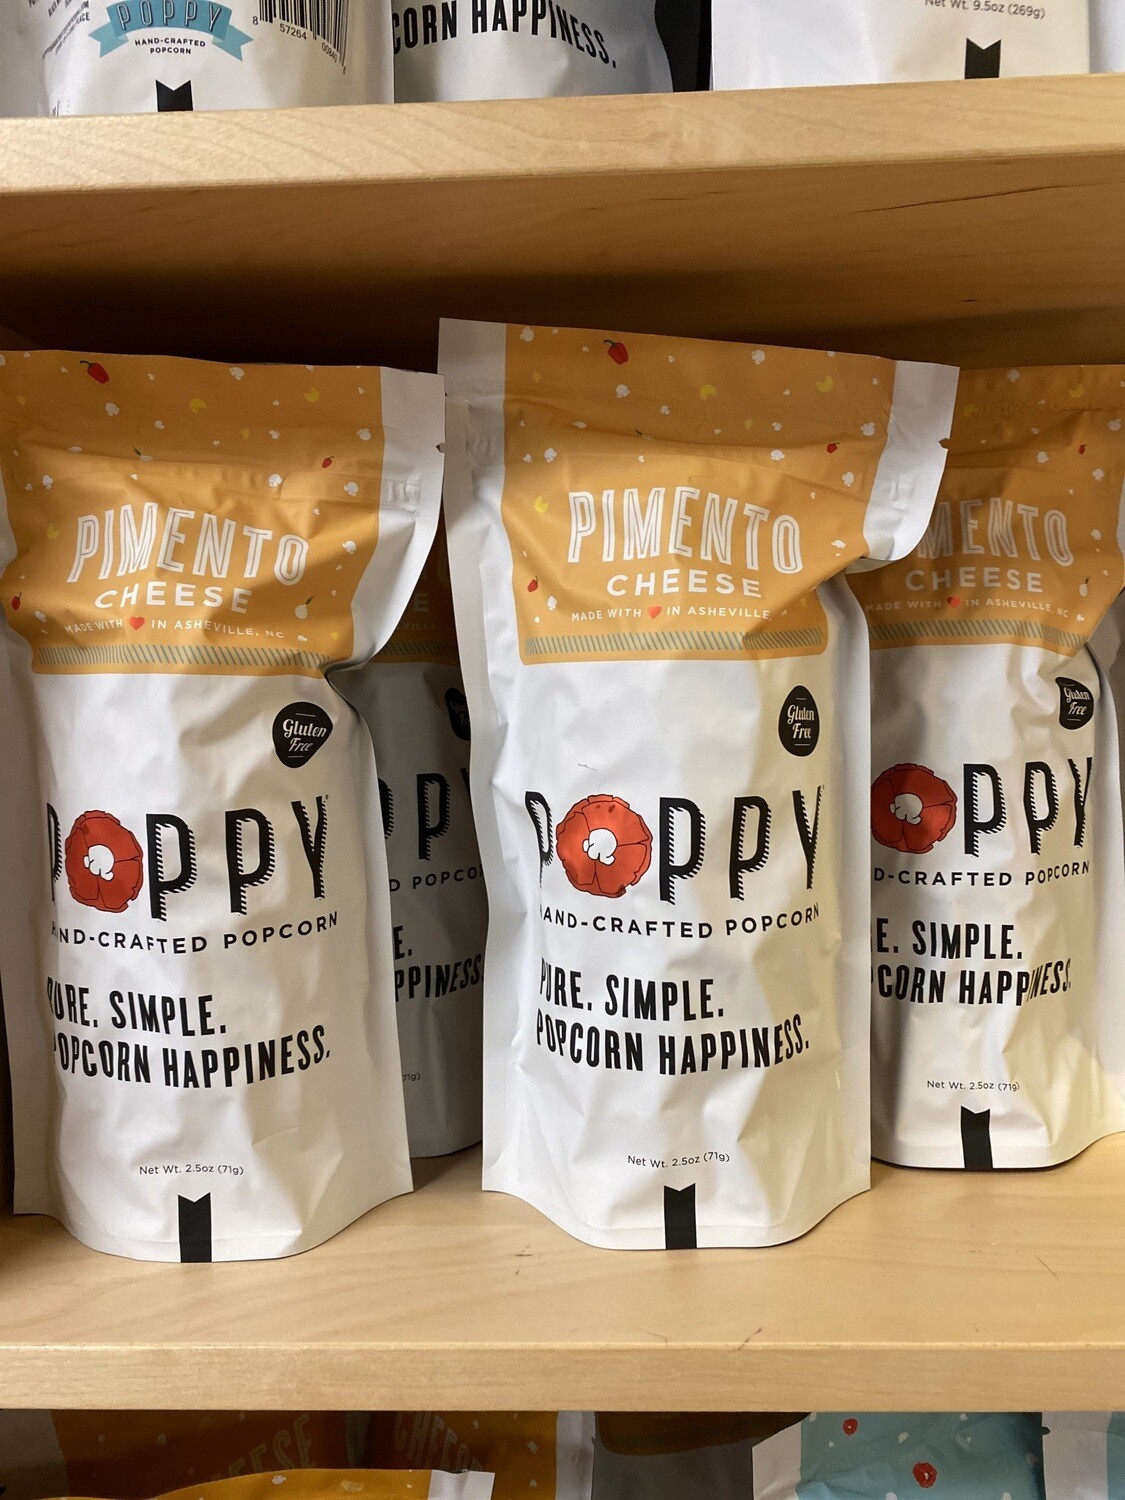 Poppy Pimento Cheese Popcorn